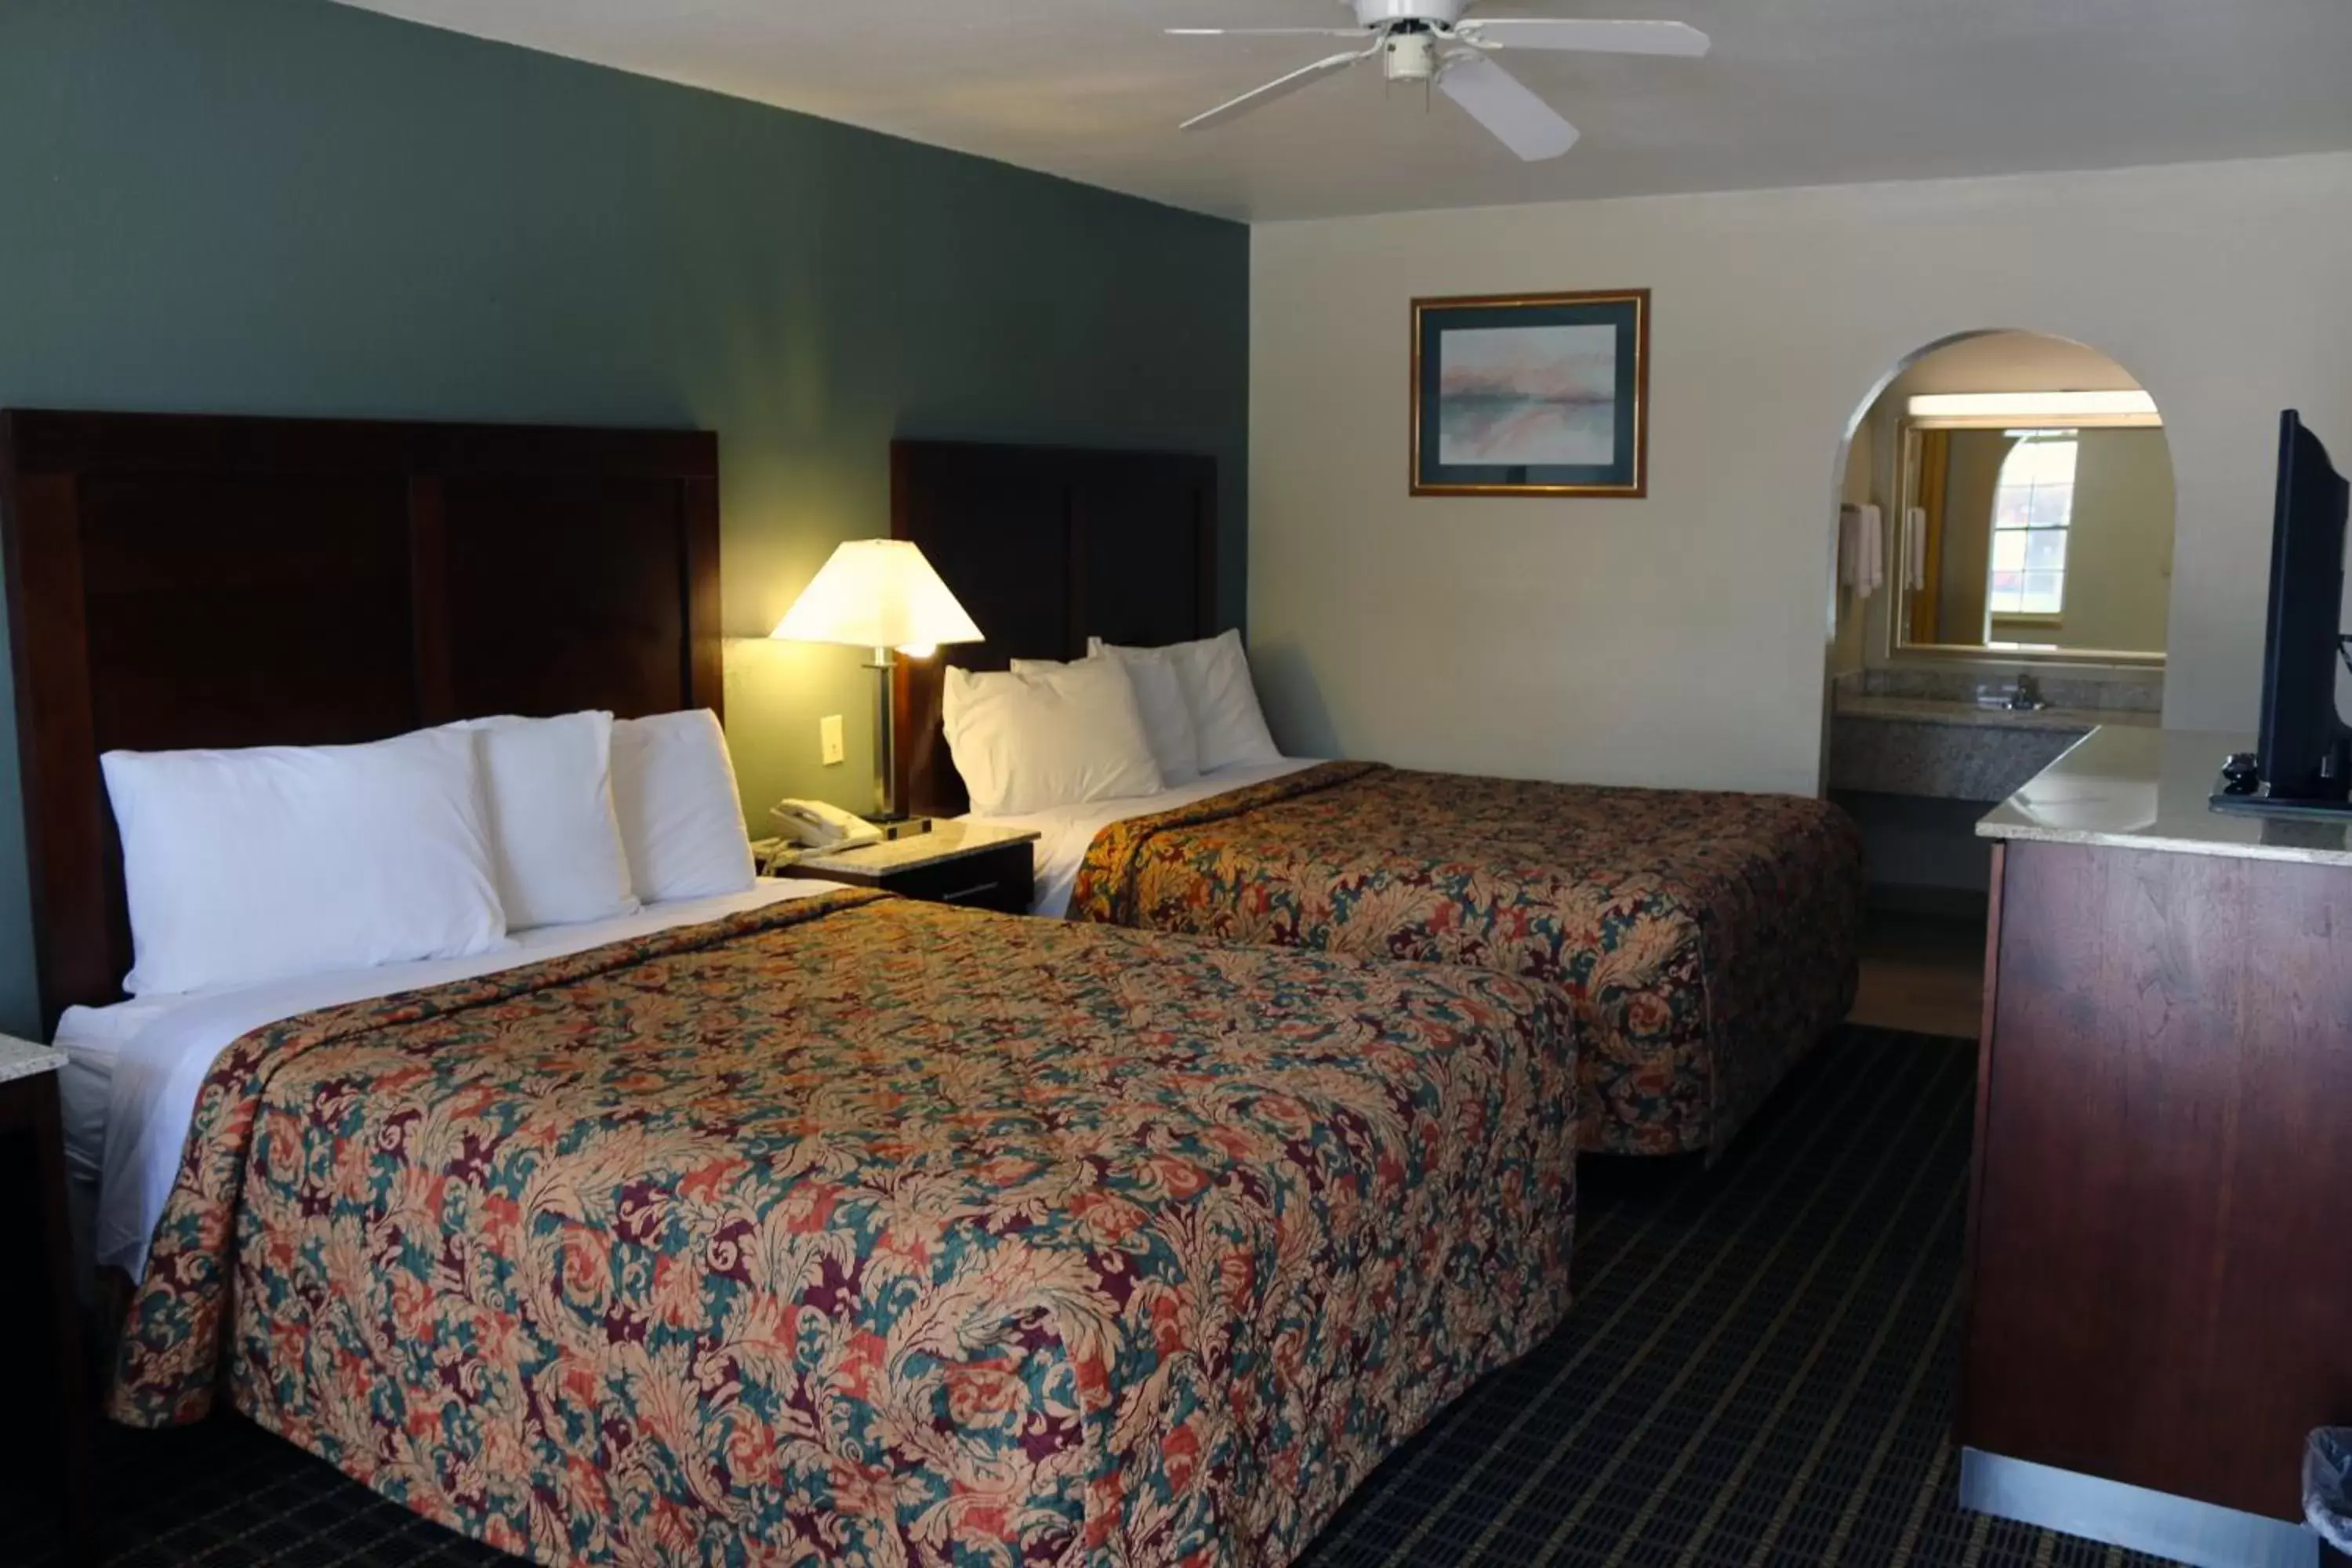 Bed, Room Photo in Great Western Inn & Suites